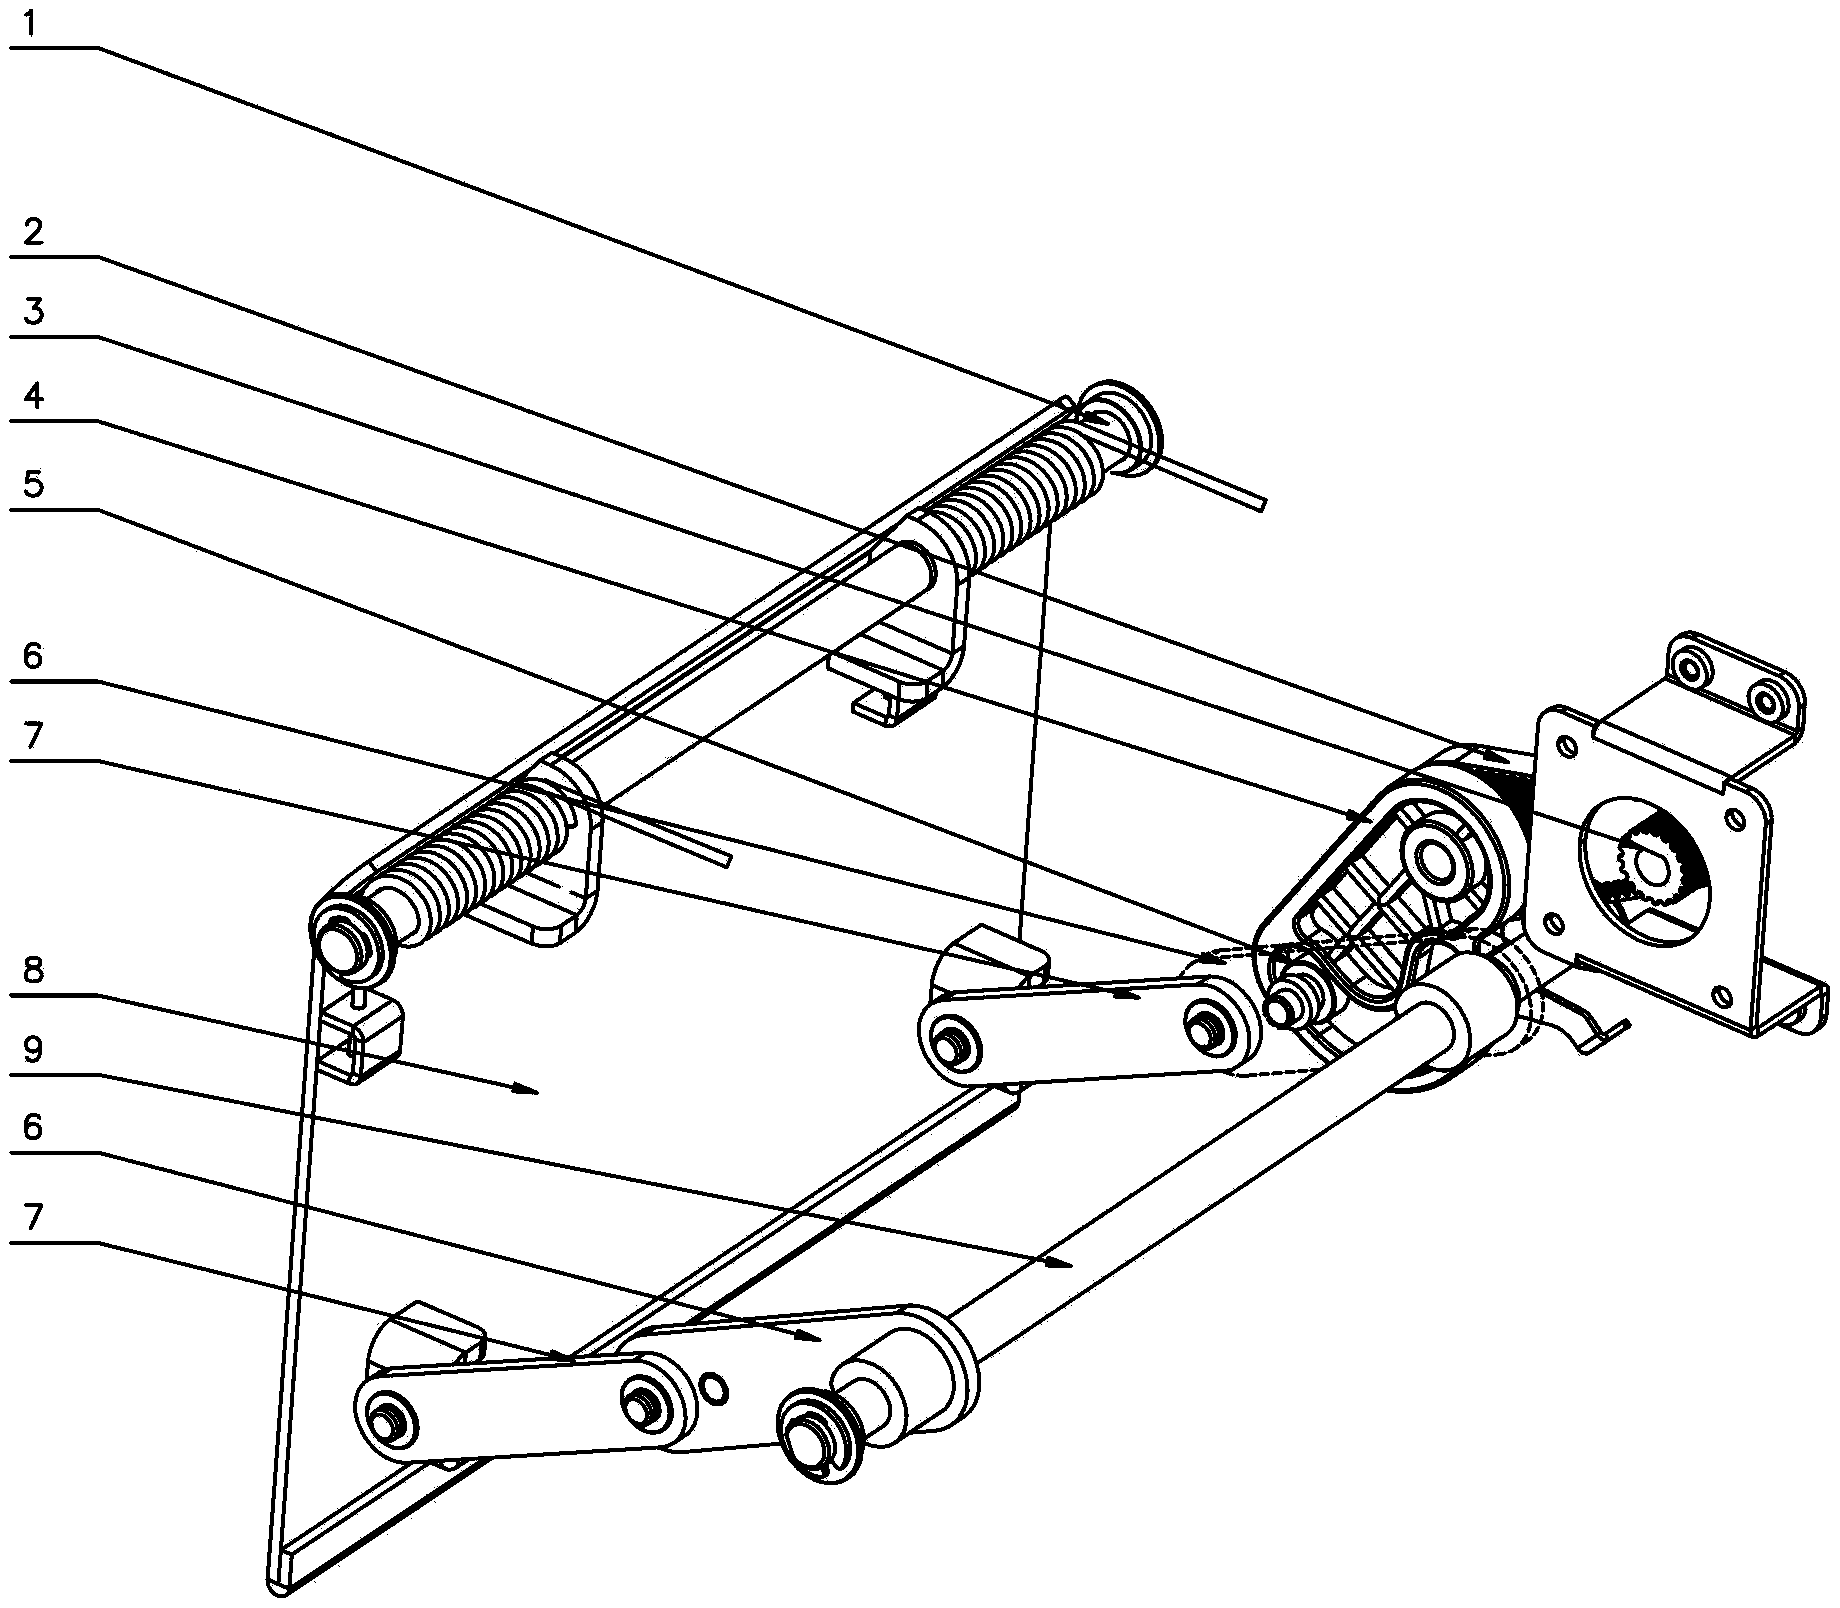 Connecting link-cam dual self-locking mechanism